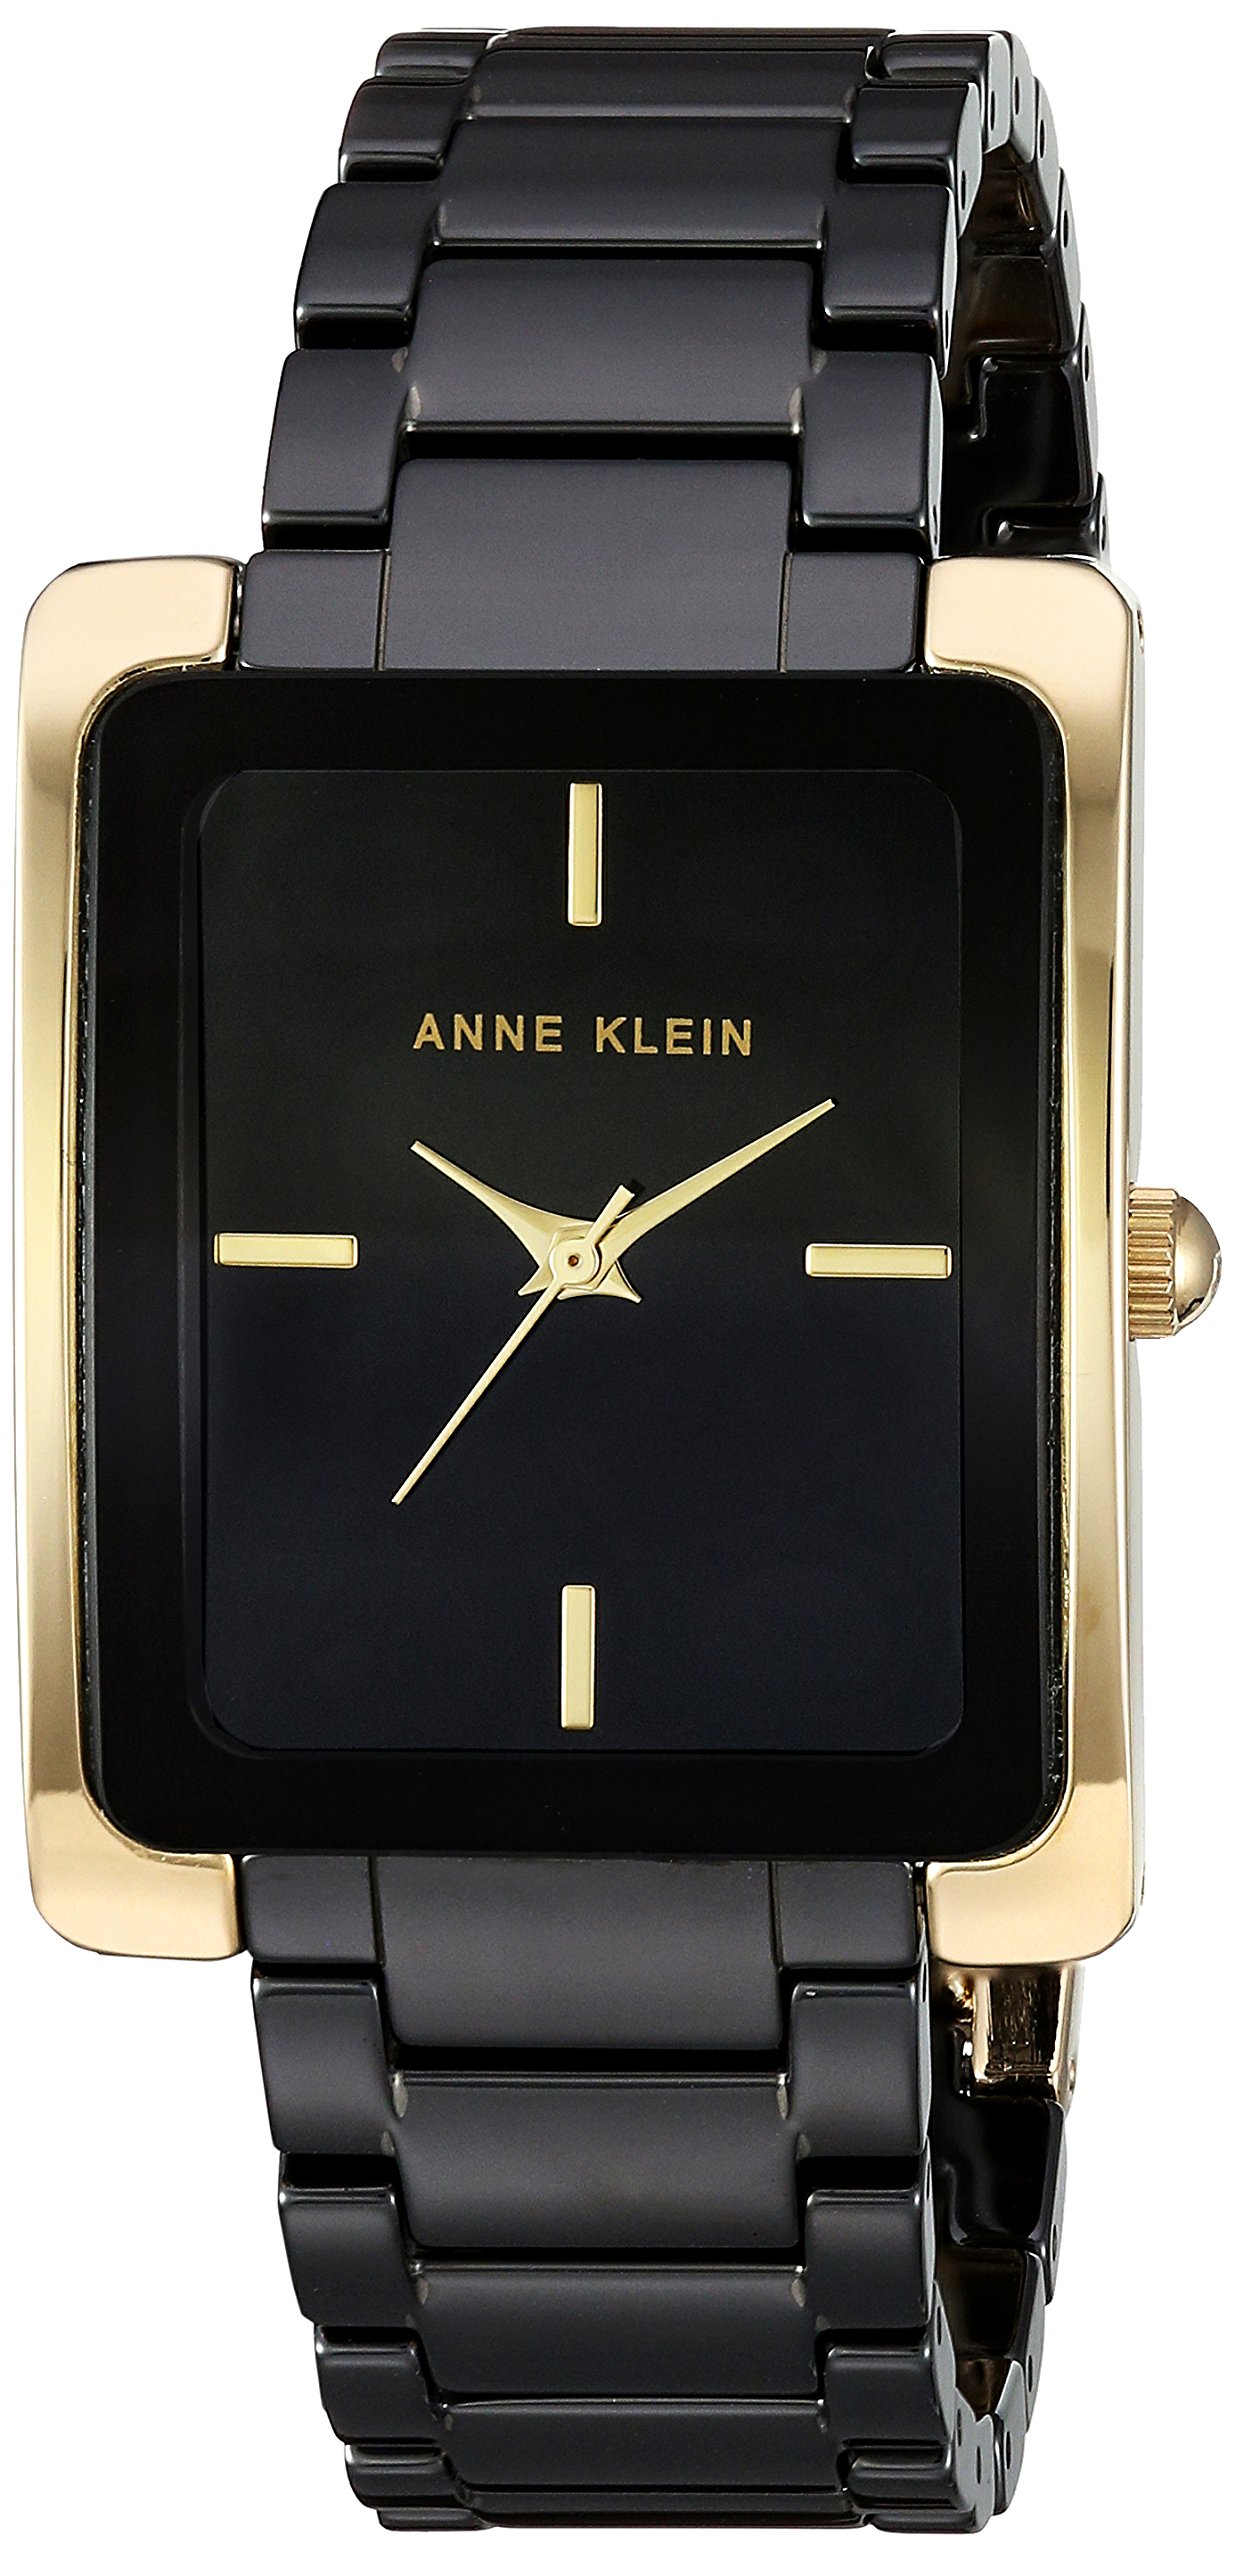 Anne Klein Women's Analog Japanese-Quartz Watch with Ceramic Strap AK/2952BKGB